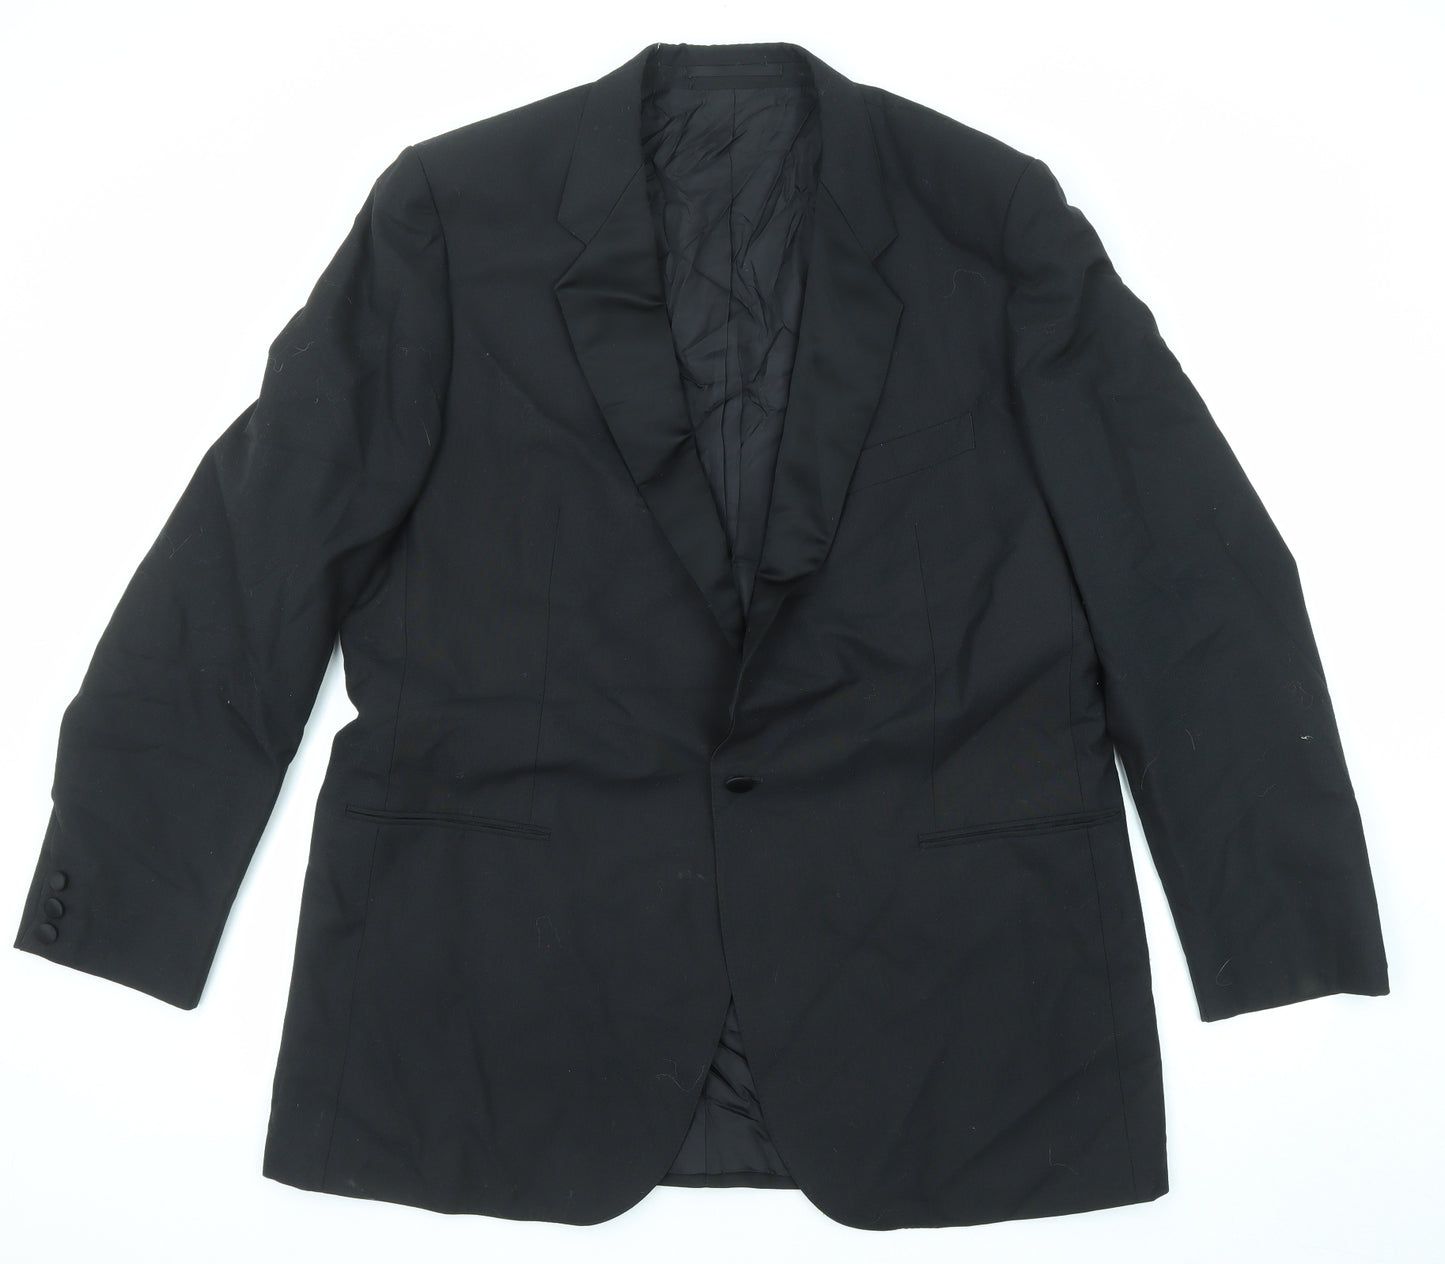 St Michael Mens Black Polyester Tuxedo Suit Jacket Size 46 Regular